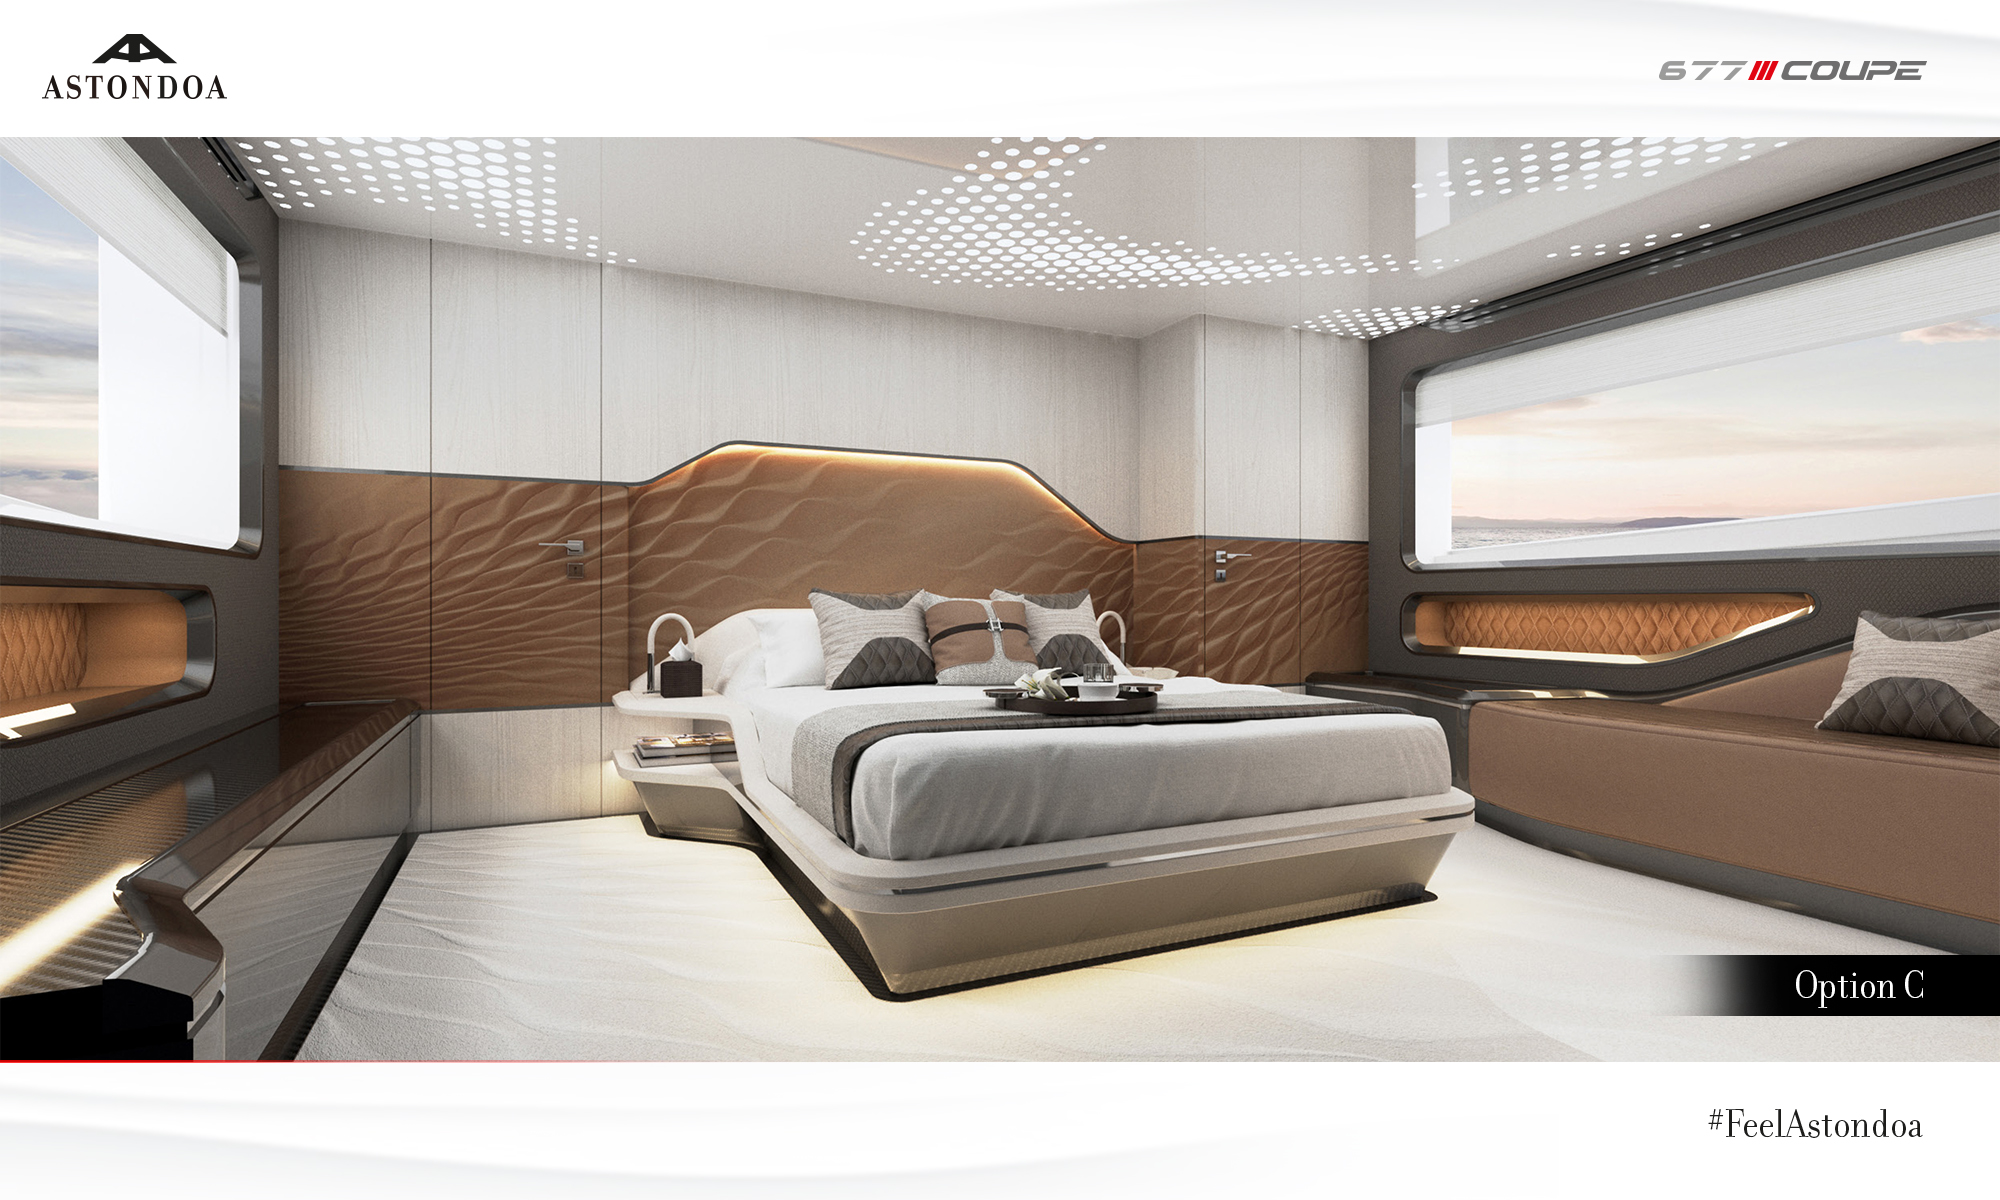 More than 10,000 fans on social media choose the interior design of the new ASTONDOA model